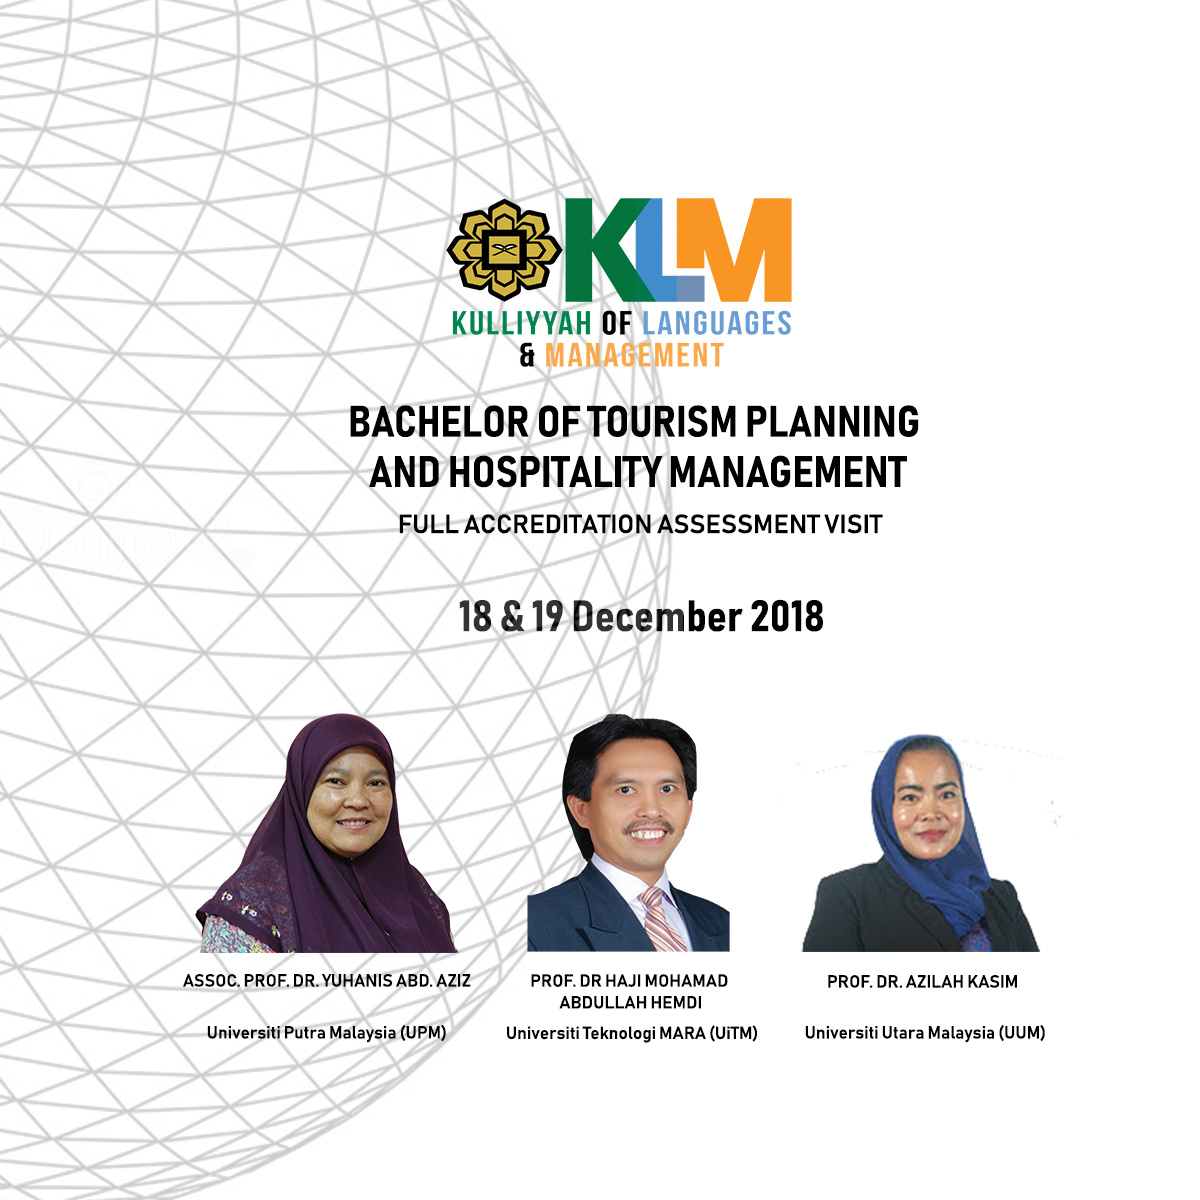 Full Accreditation Assessment Visit for Bachelor of Tourism Planning and Hosplitality Management